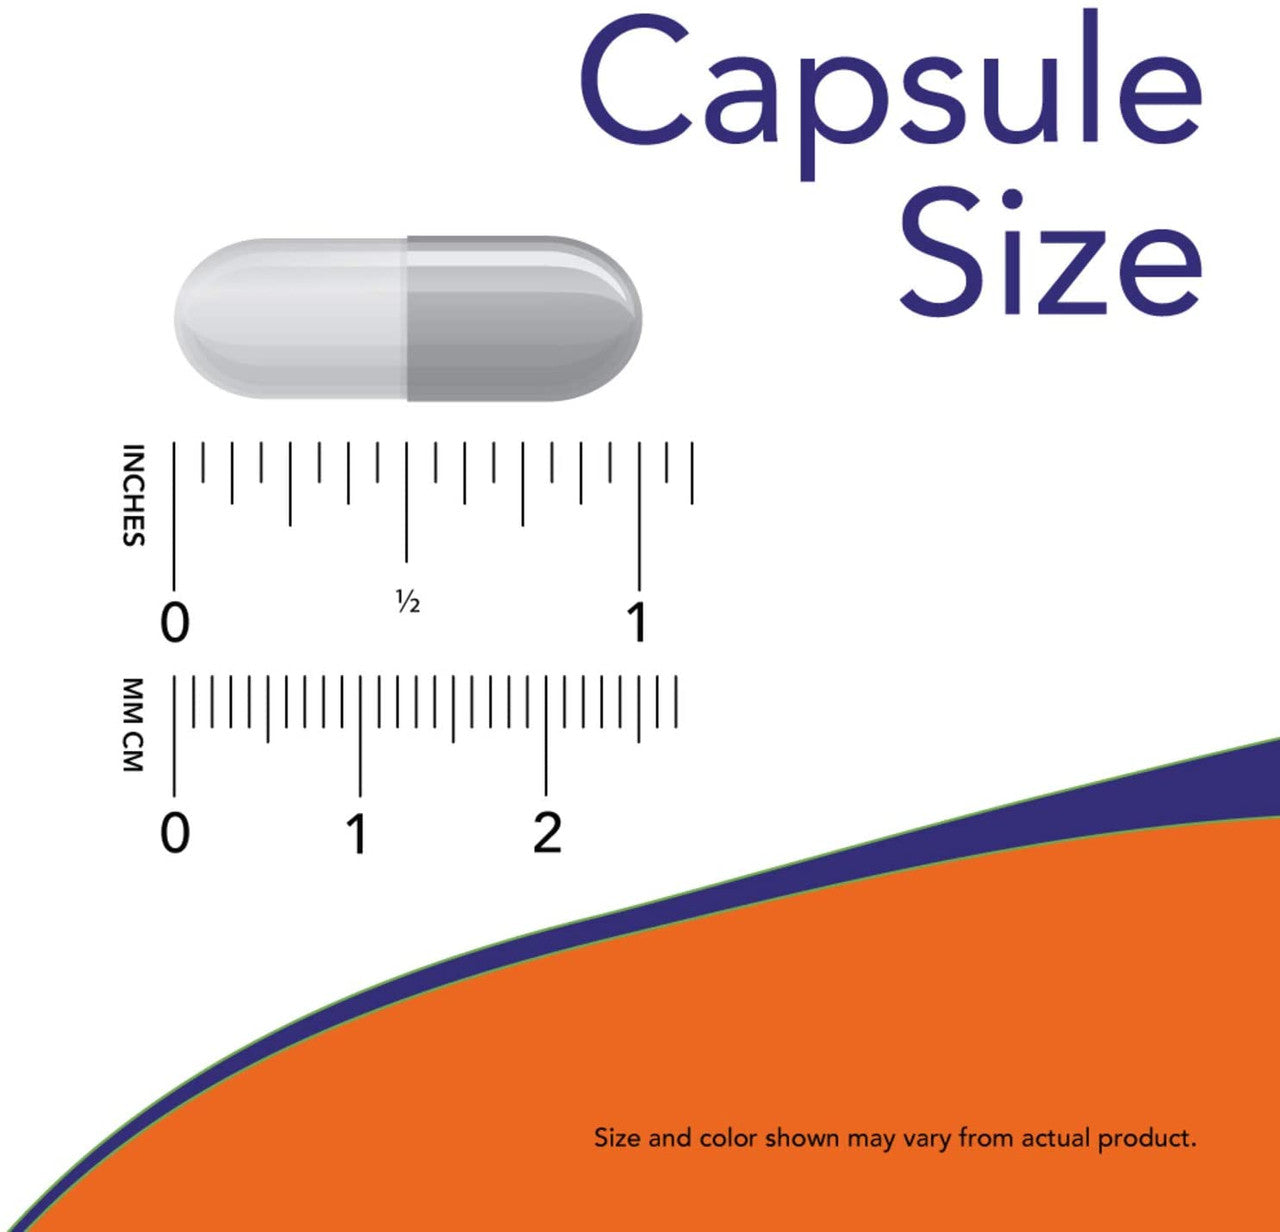 Now C-1000 w/Bioflavonoids capsule size